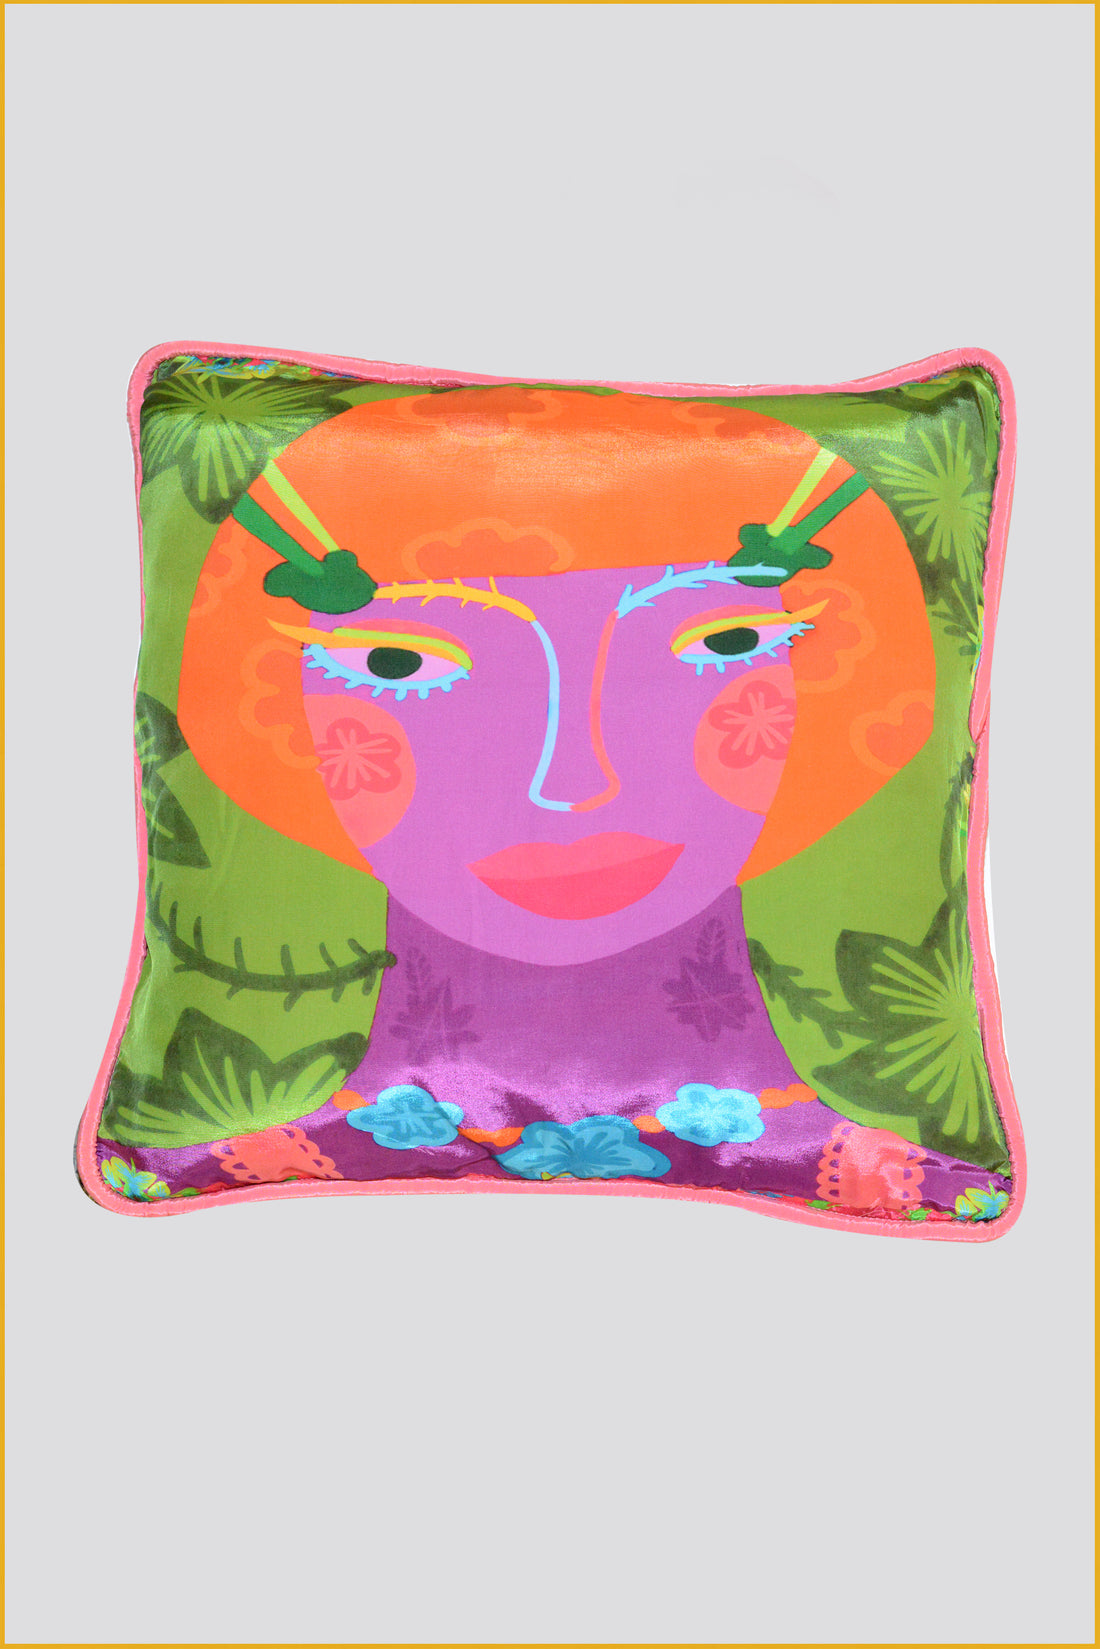 Venus - Viscose Crepe Digital Print Pillow Cushion (7413845622980)